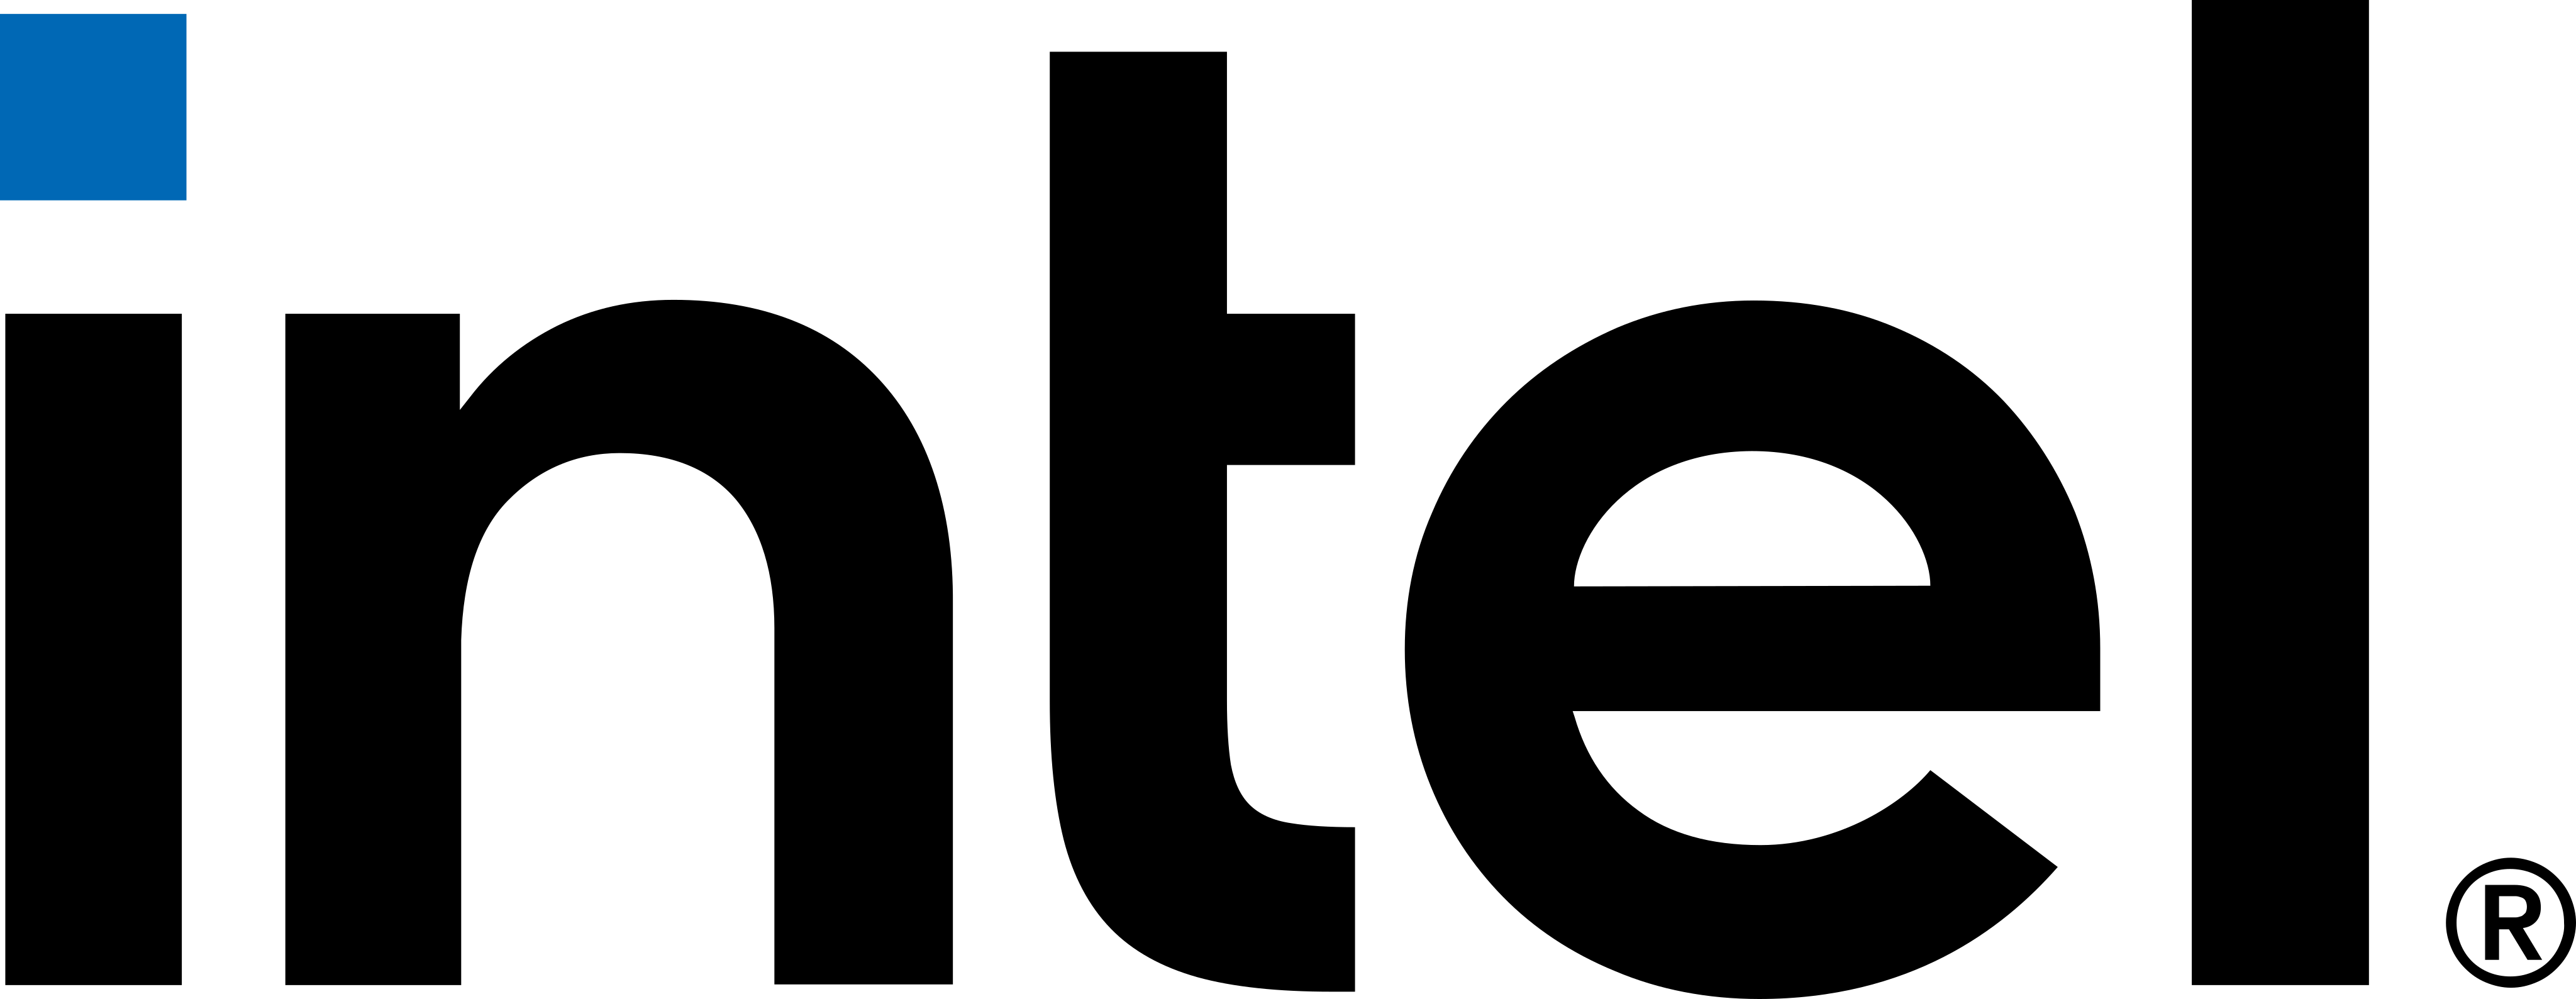 new intel logo